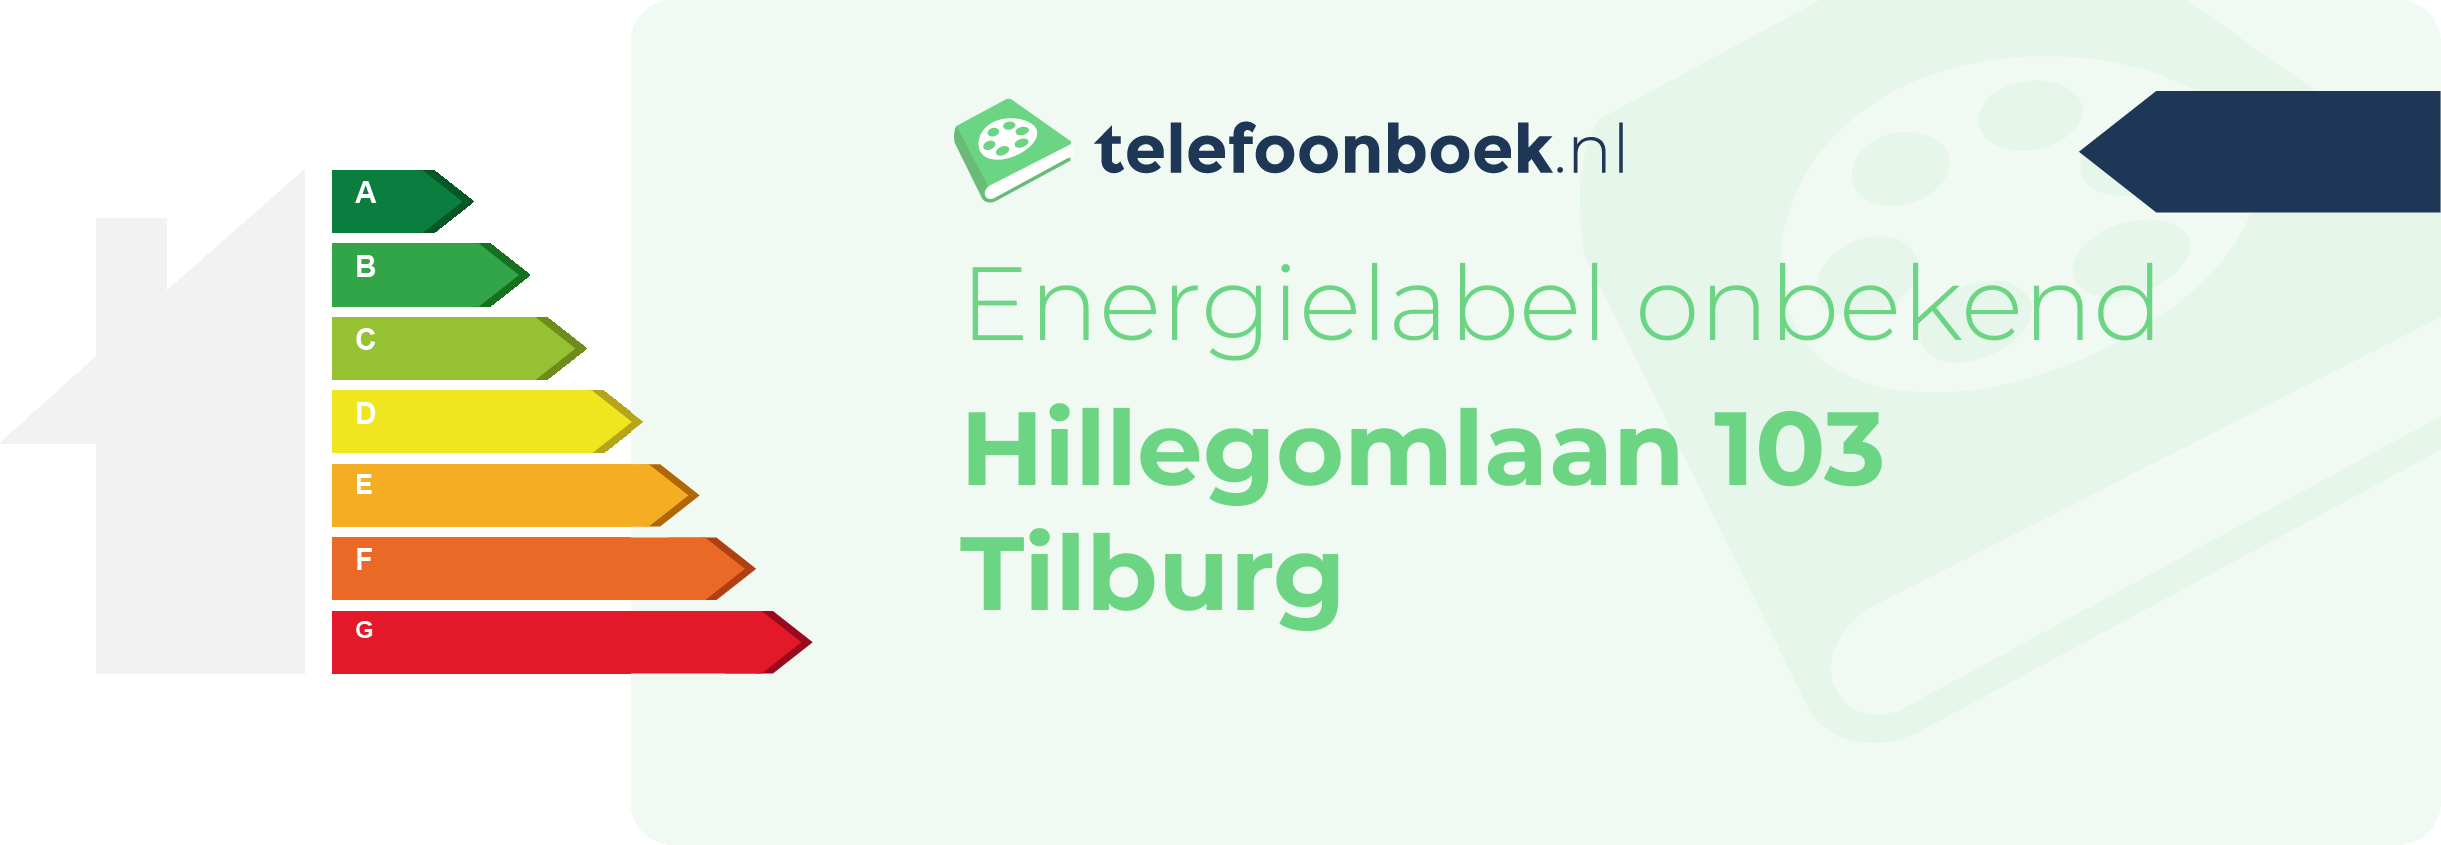 Energielabel Hillegomlaan 103 Tilburg